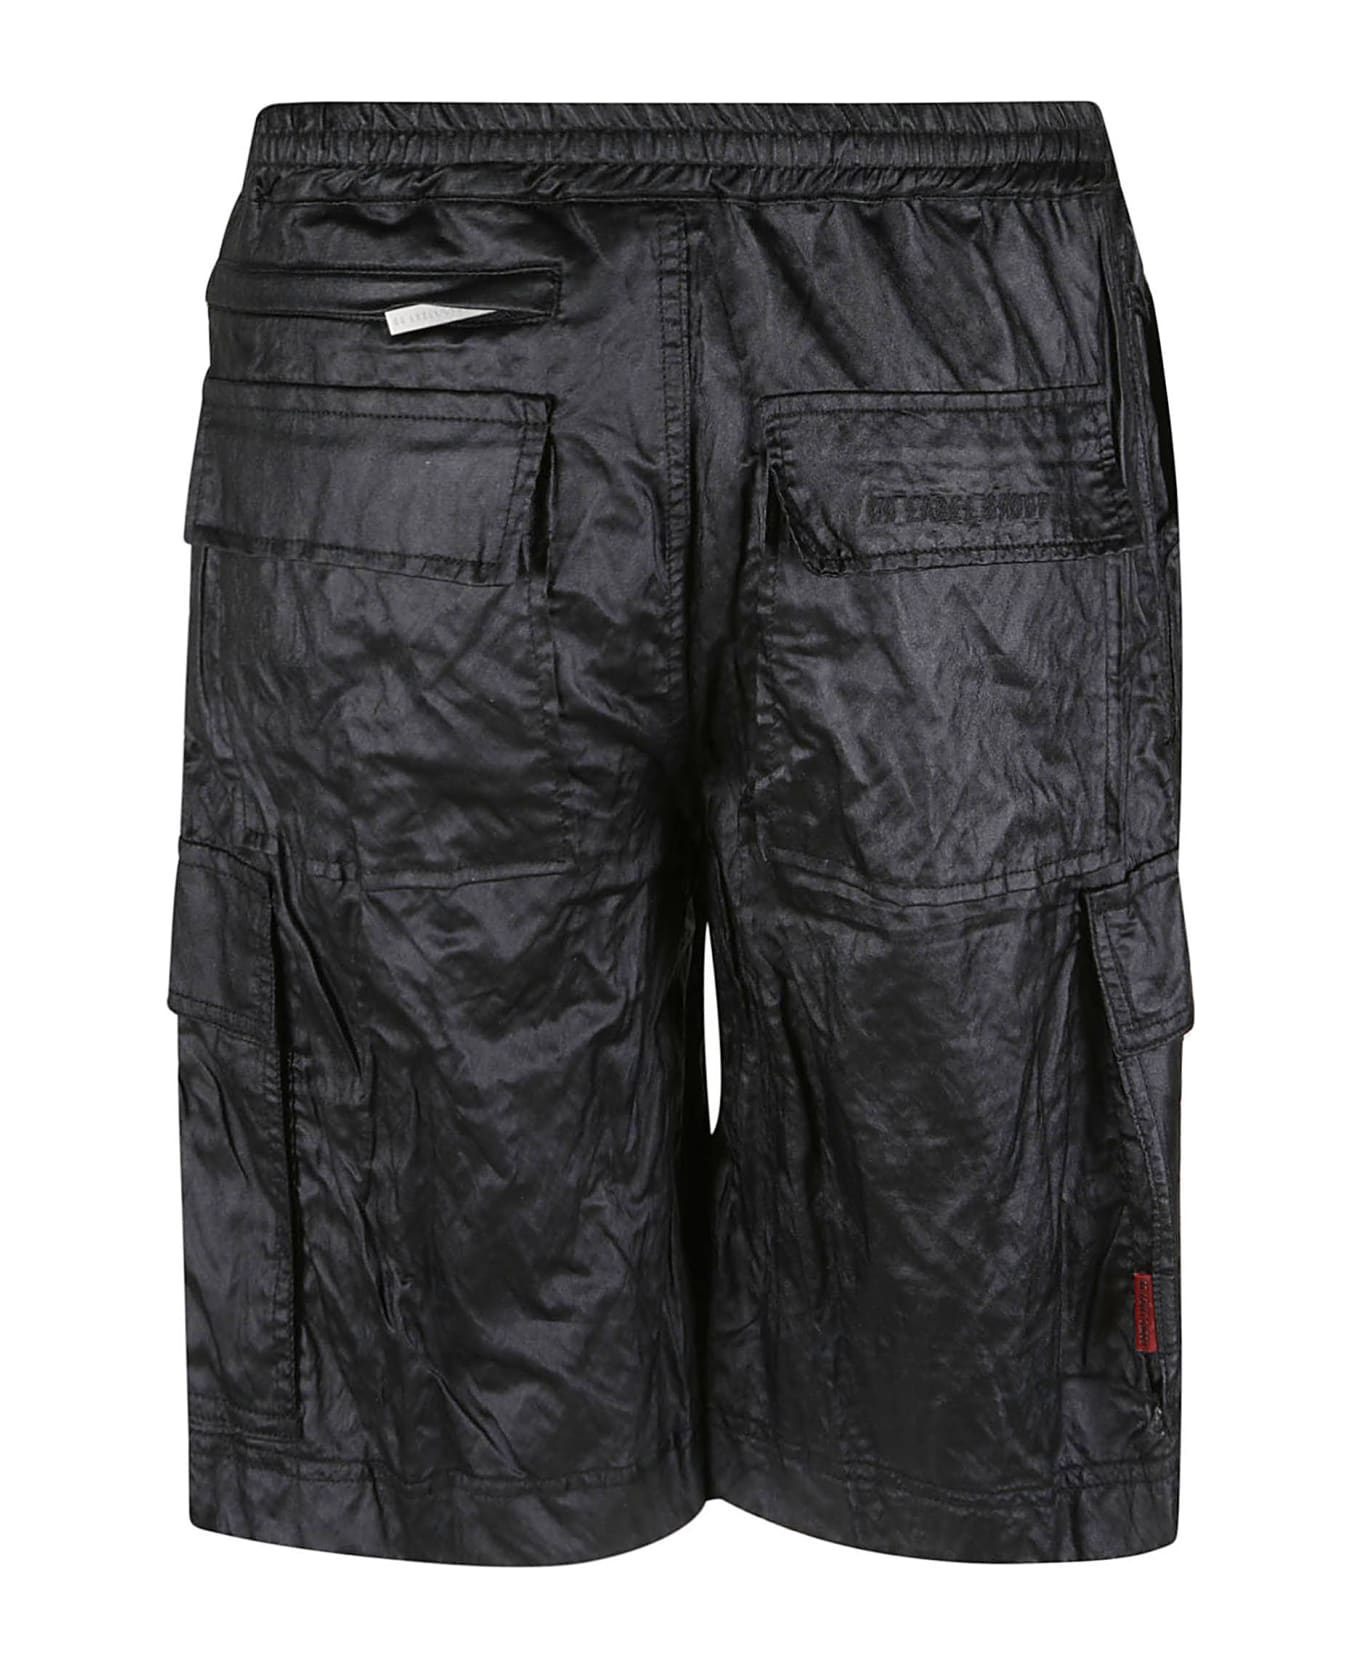 44 Label Group Cargo Ribbed Shorts - Black